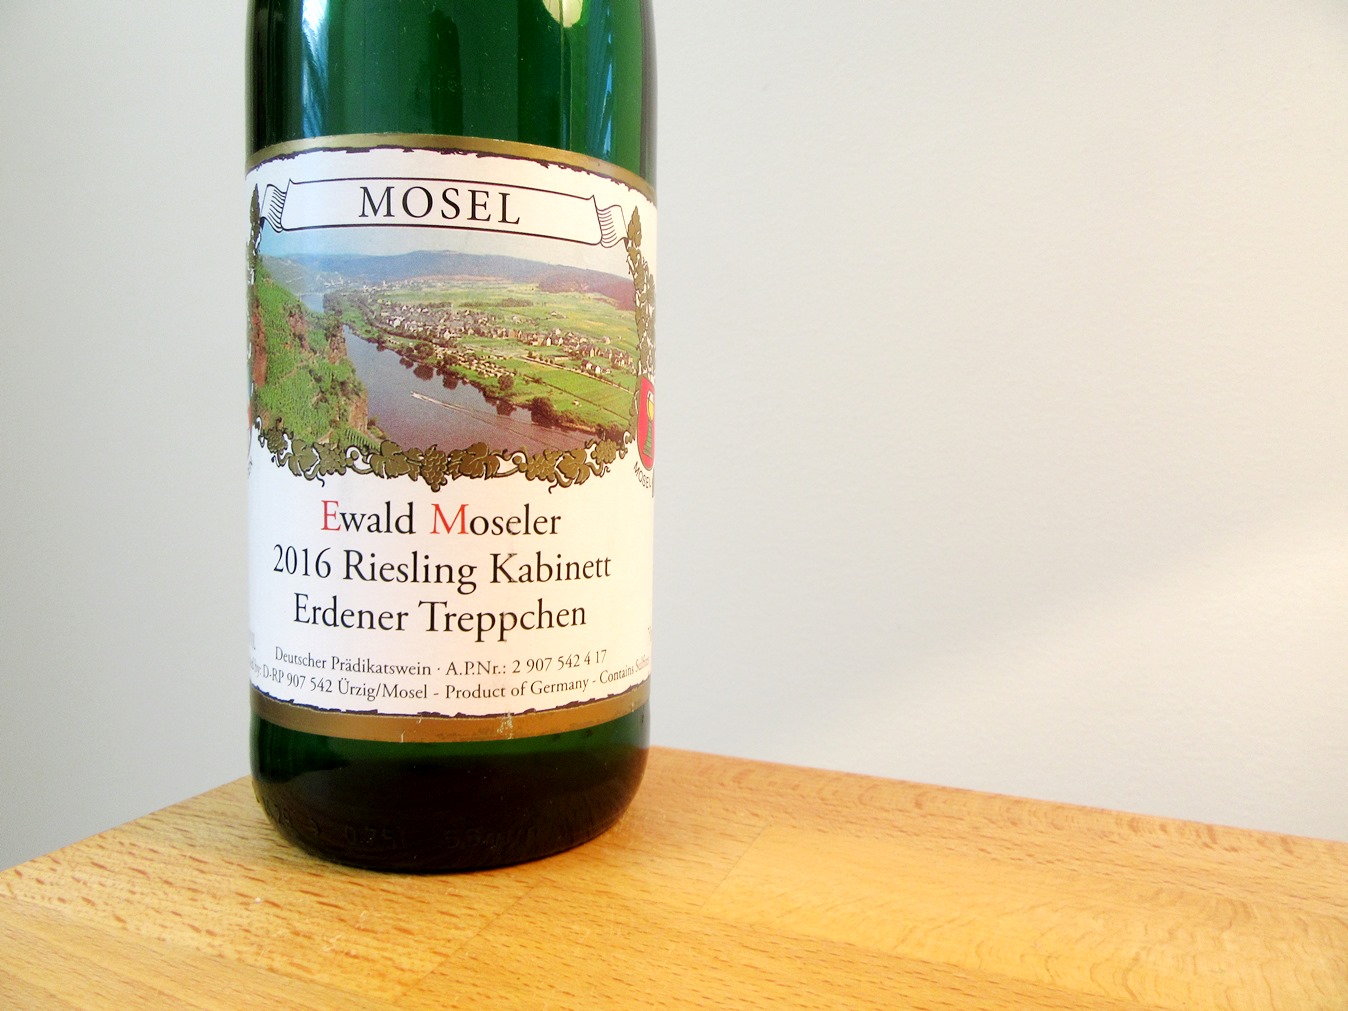 Ewald Moselr, Erdener Treppchen Riesling Kabinett 2016, Mosel, Germany, Wine Casual